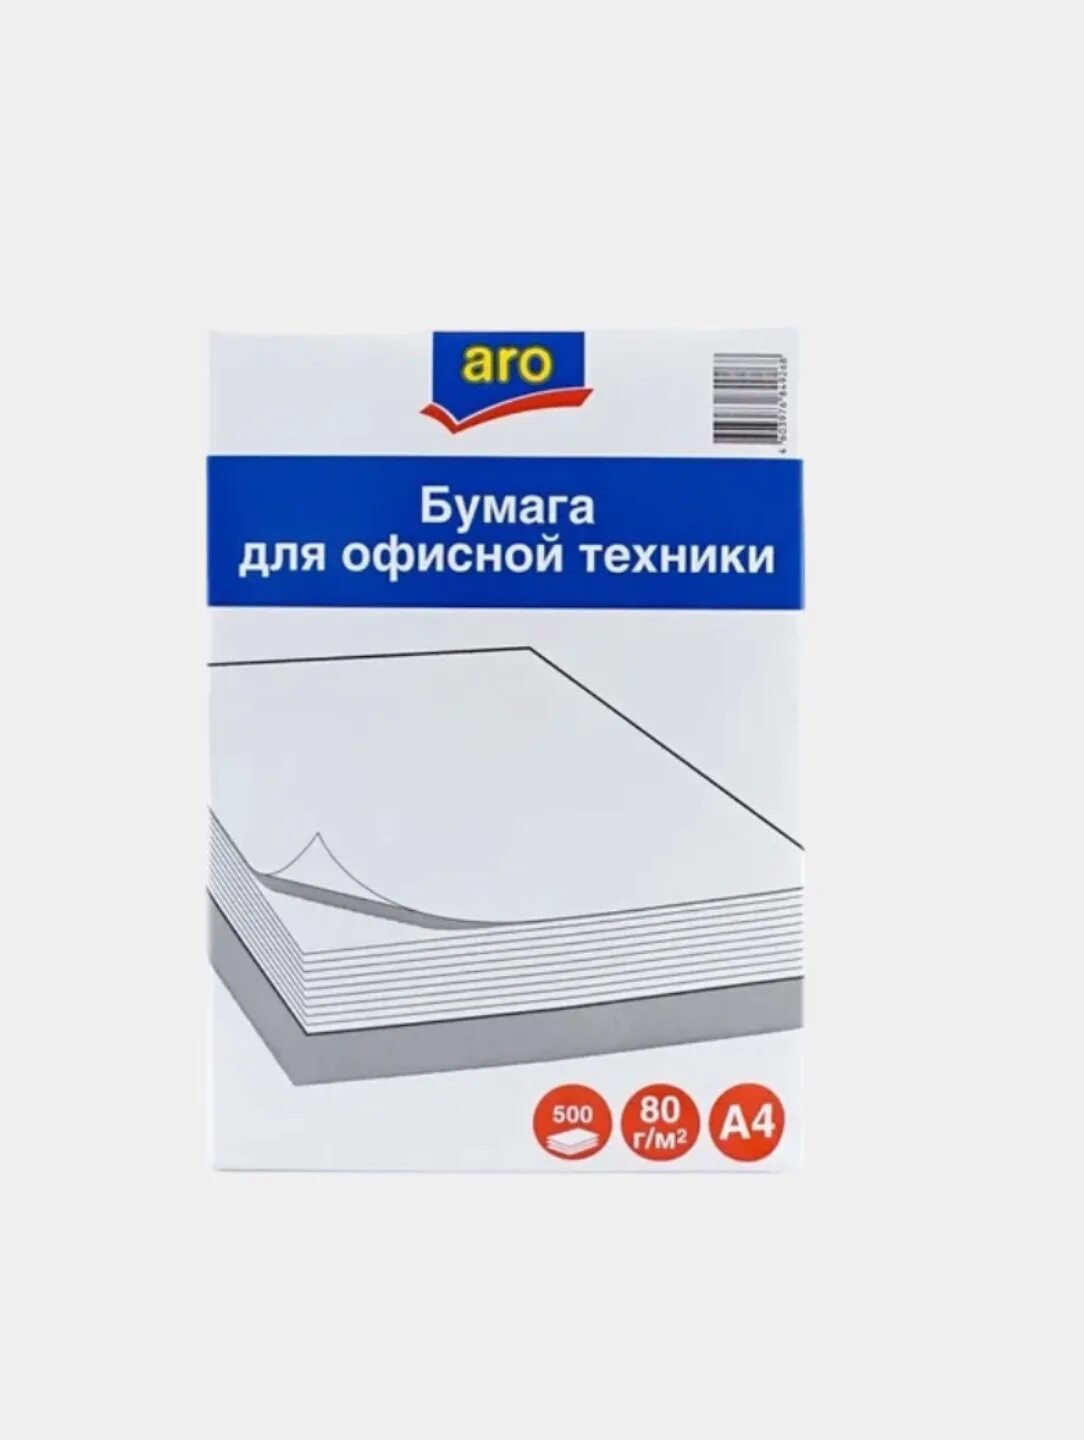 Бумага 80 г м. Aro бумага офисная а4. Бумага для печати Aro a4 80 г/м 500 листов. Aro бумага a4, 80г/м2. Бумага Aro а4 80 г/м офисная 500 листов.